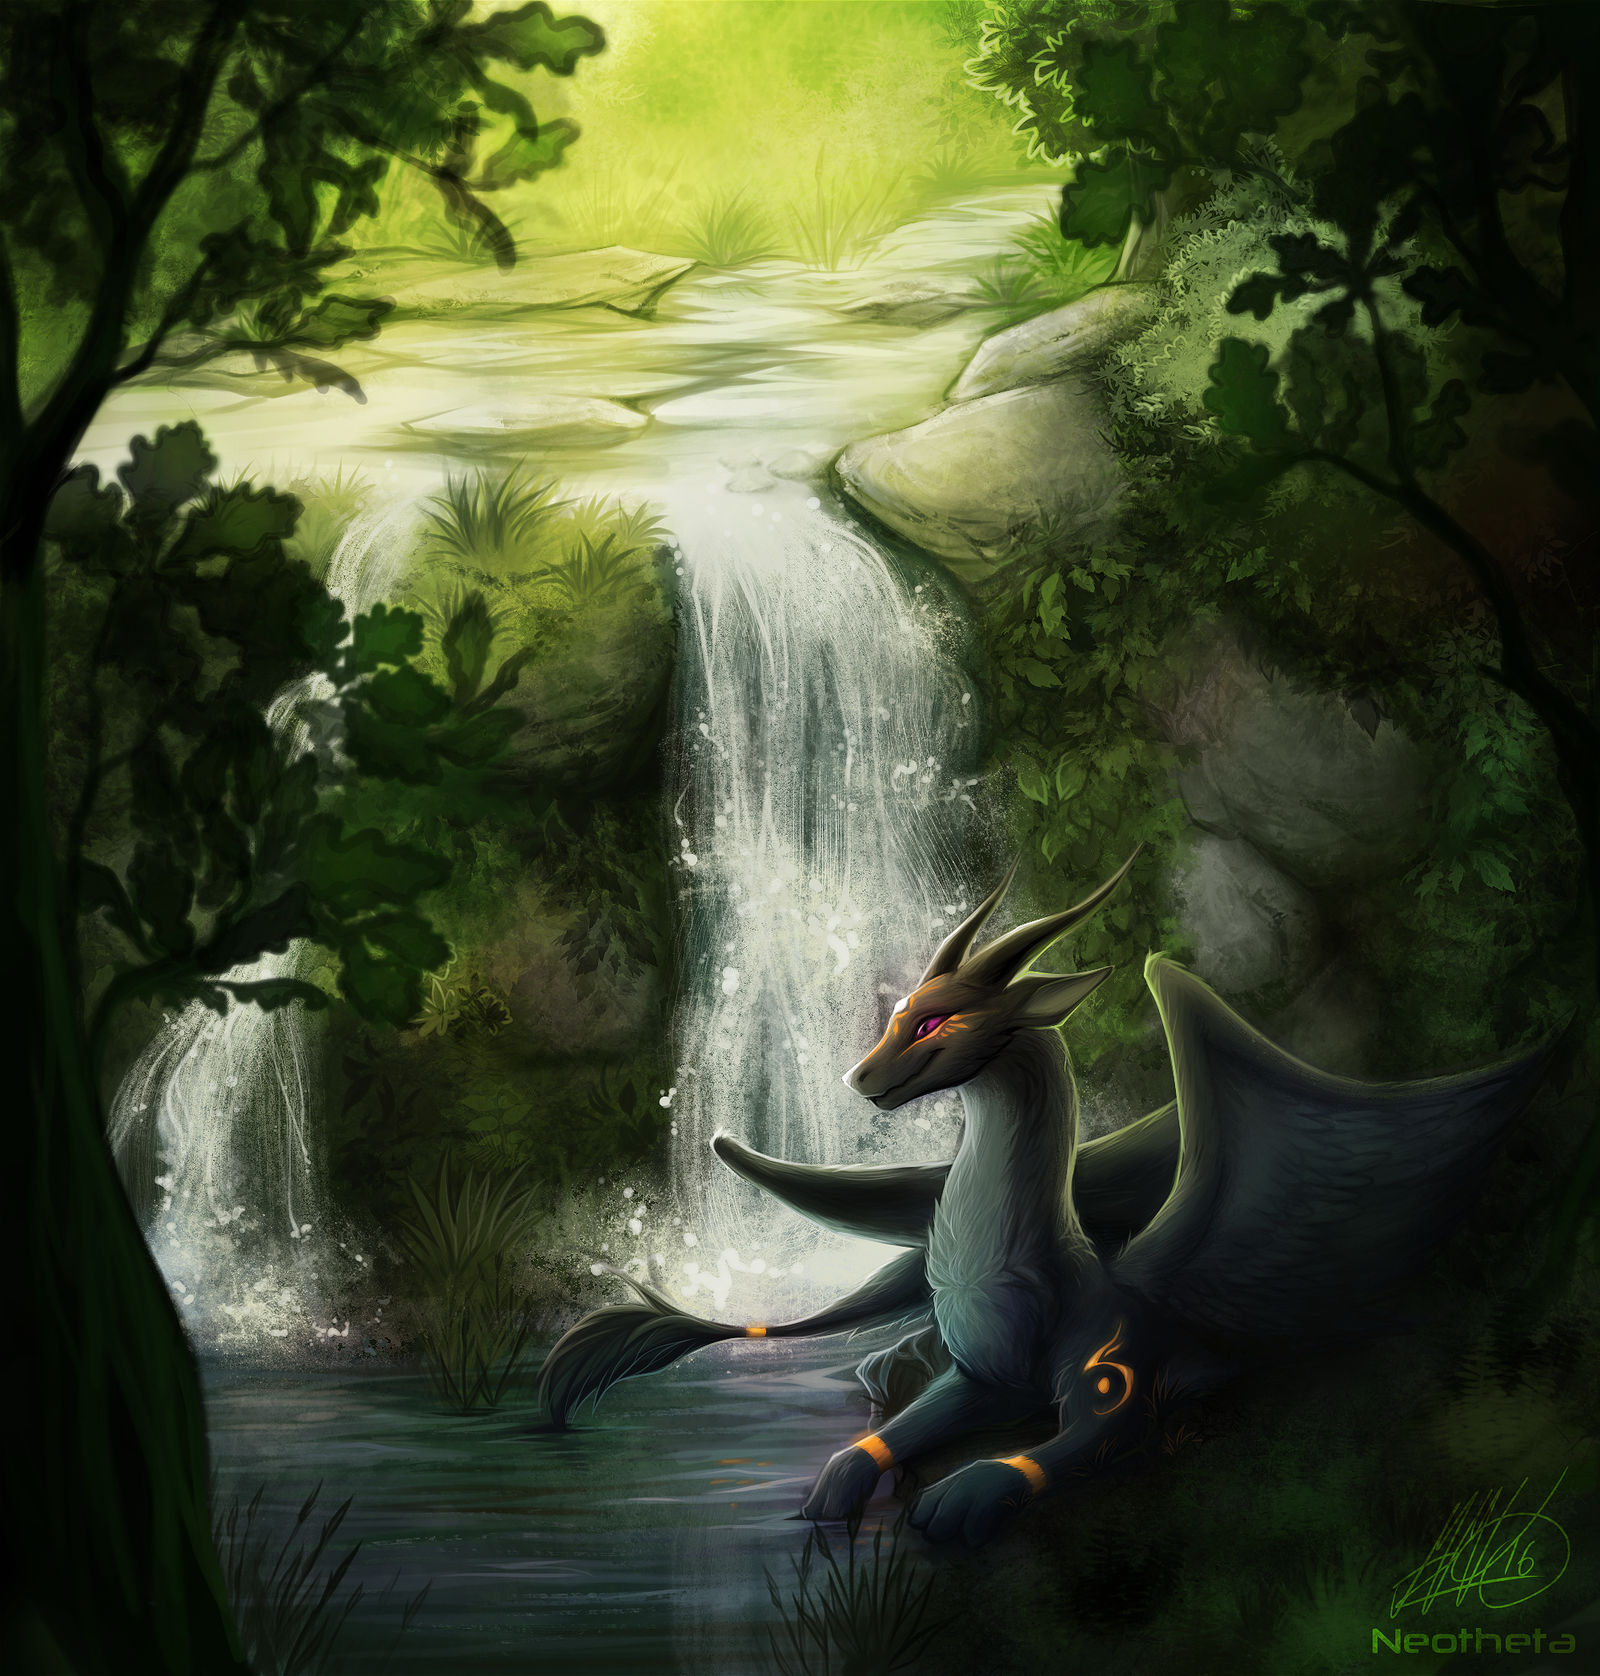 dragon_falls_by_neotheta_d9mlavl-fullview.png